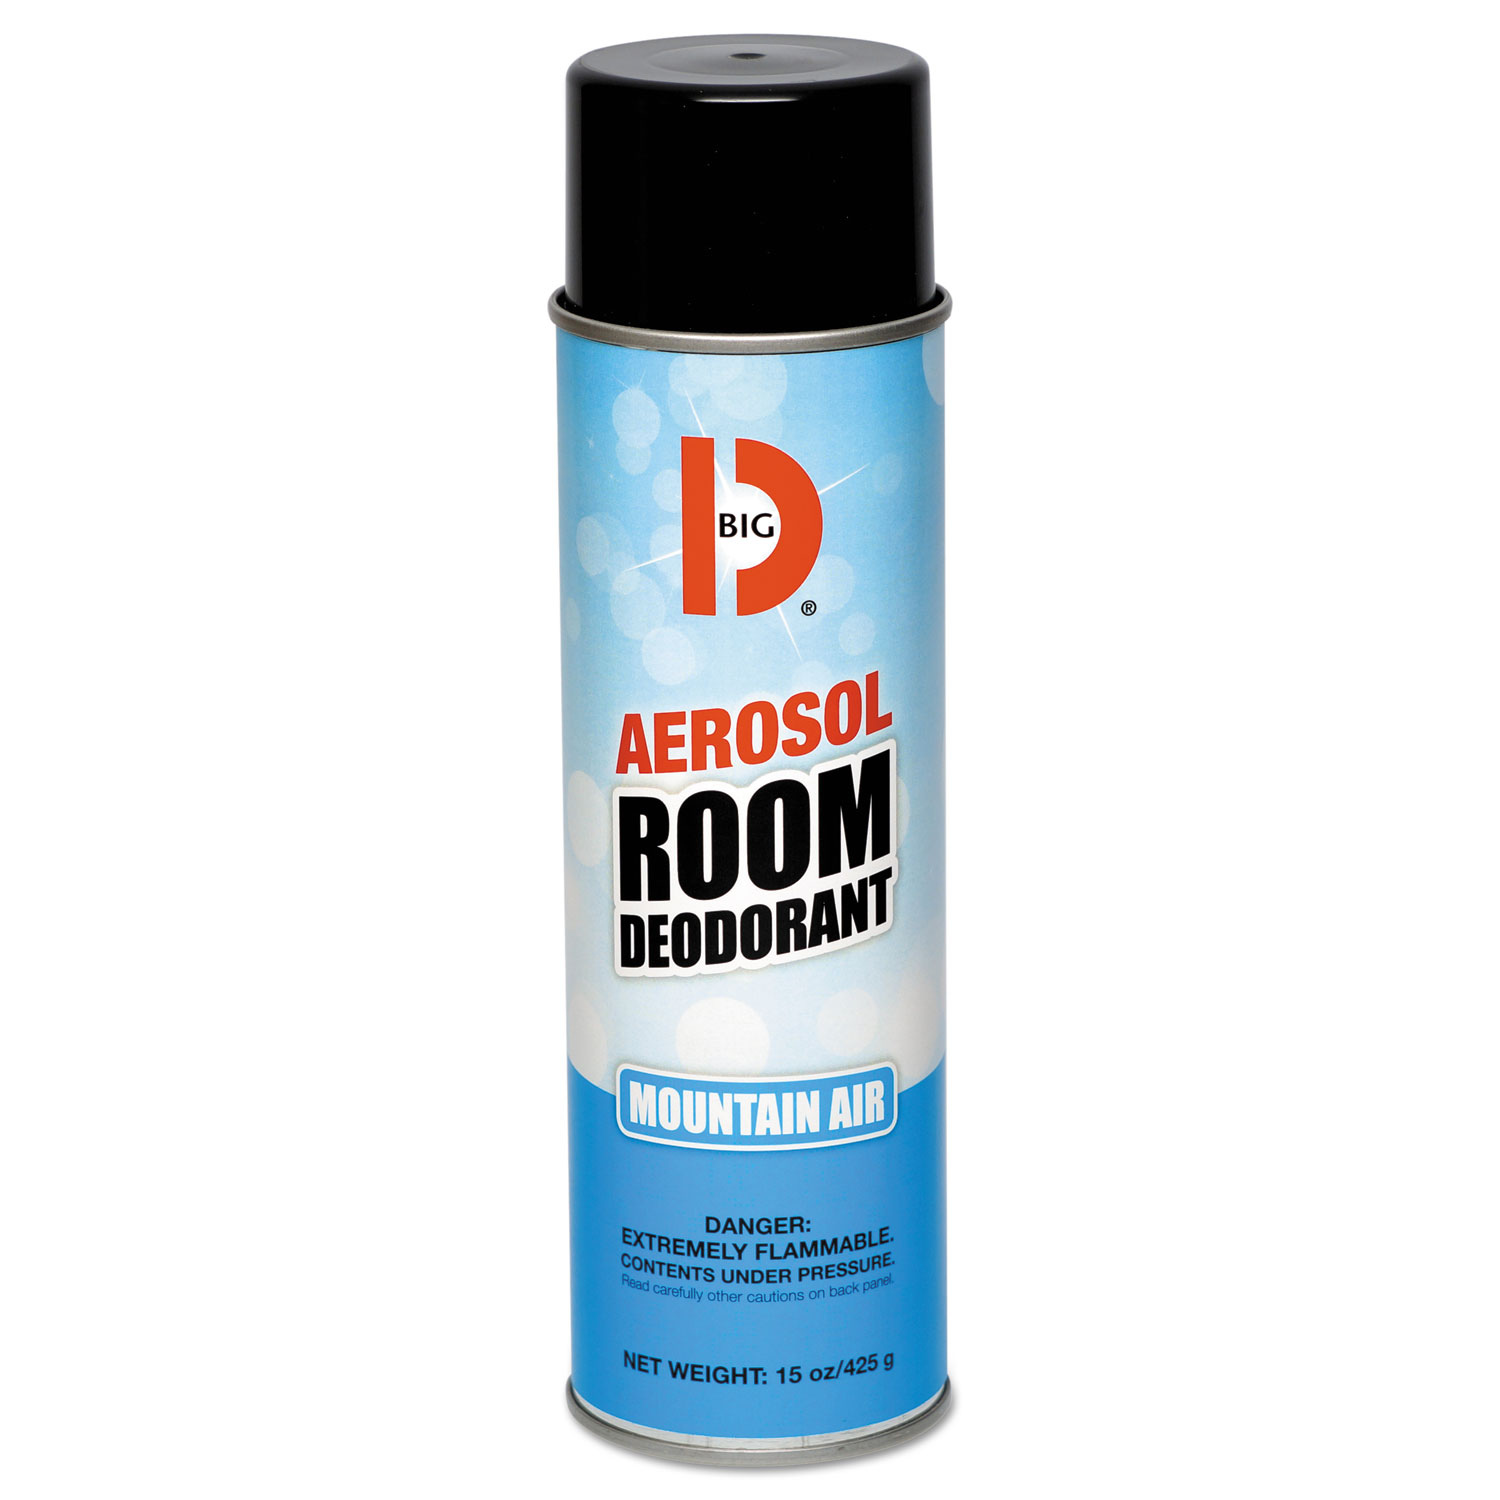 Aerosol Room Deodorant, Mountain Air Scent, 15 oz Can, 12/Box